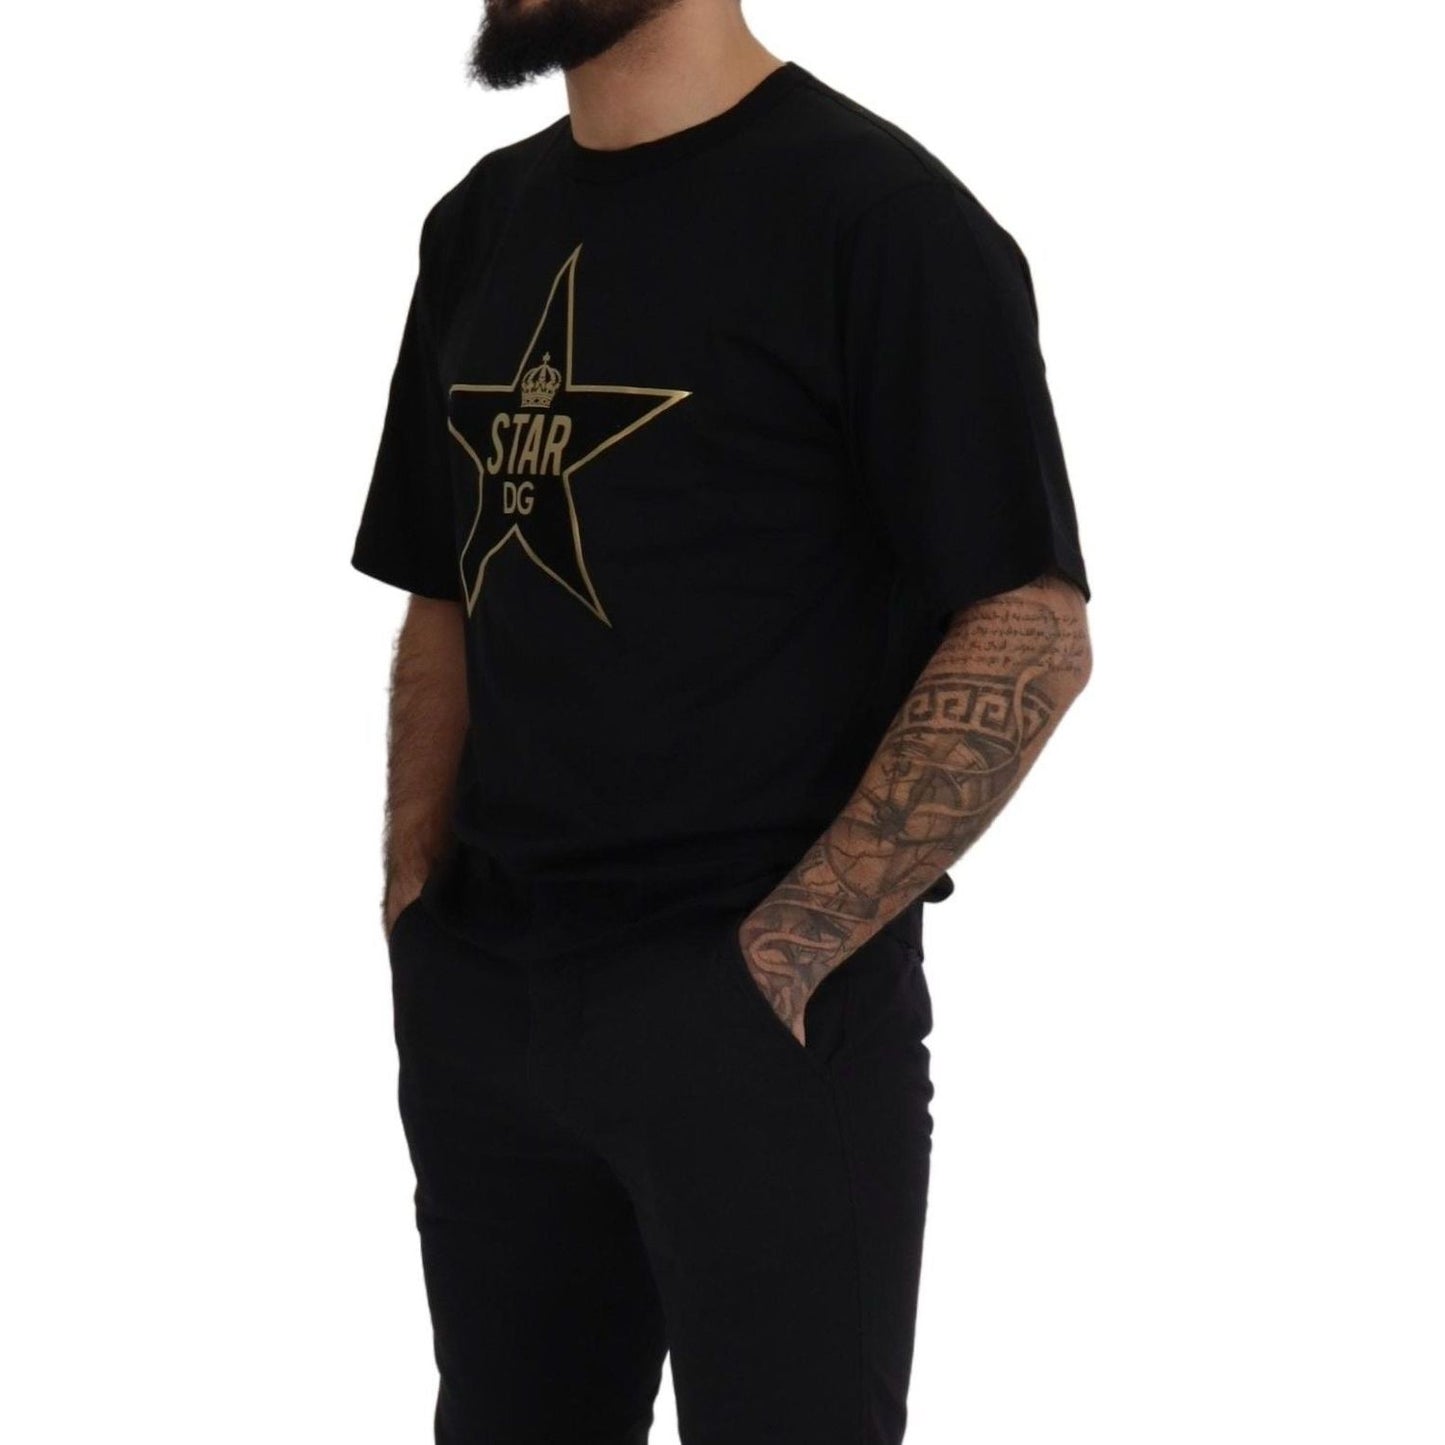 Dolce & Gabbana Gold Star DG Emblem Crewneck Tee black-gold-star-crown-dg-cotton-crewneck-t-shirt